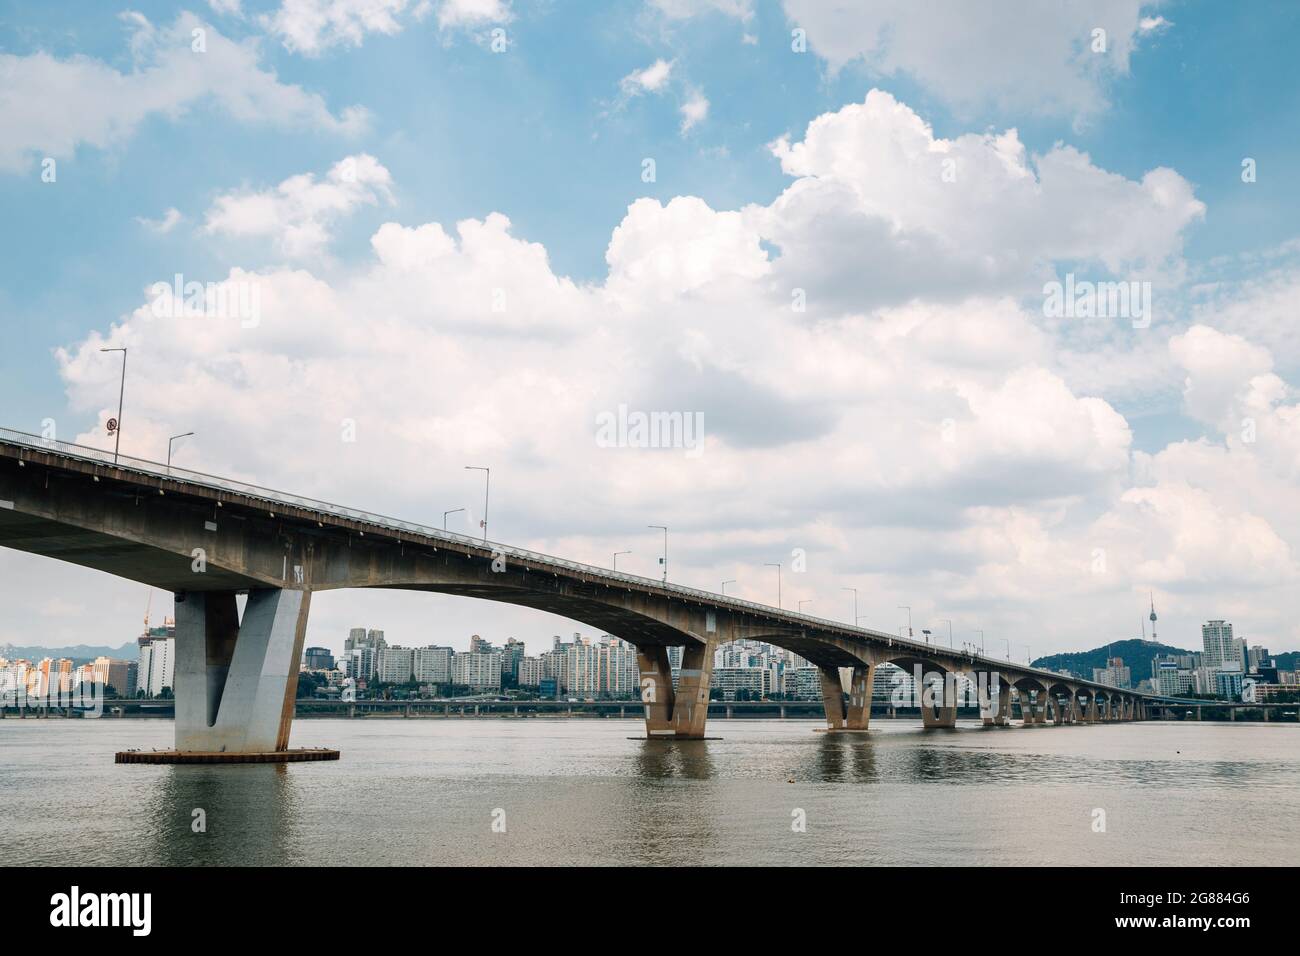 Yeouido Hangang River Park and Wonhyo Bridge in Seoul, Korea Stock Photo